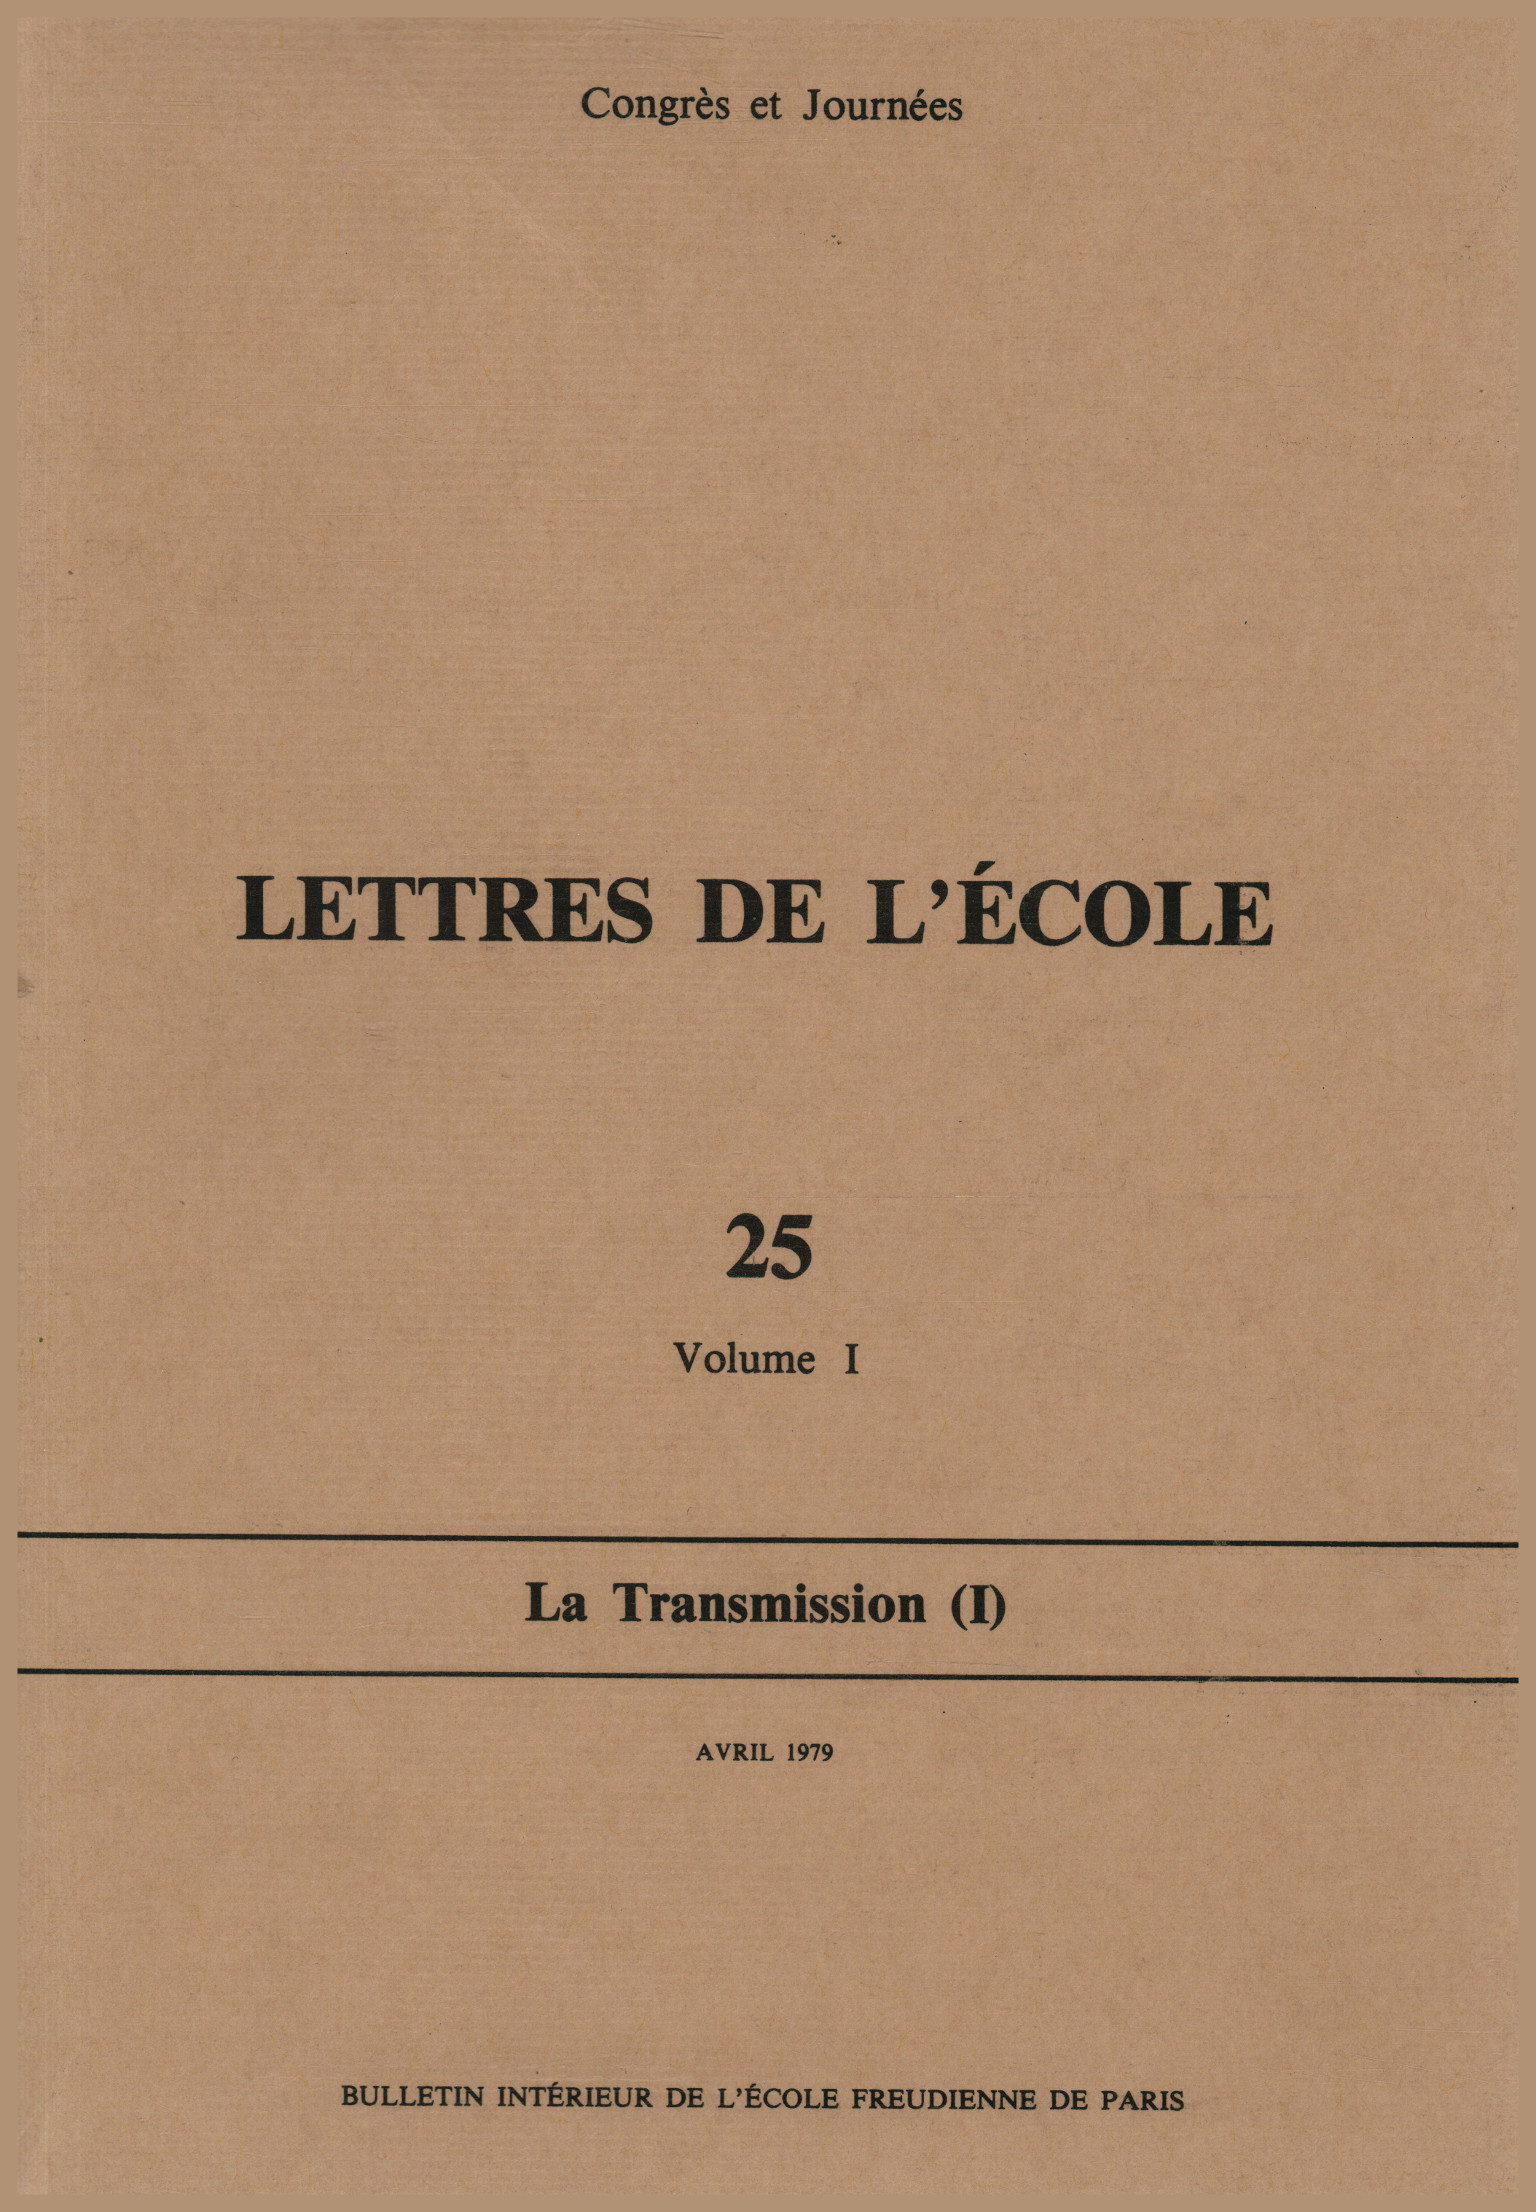 Lettres de l ècole. Volumen I, AA.VV